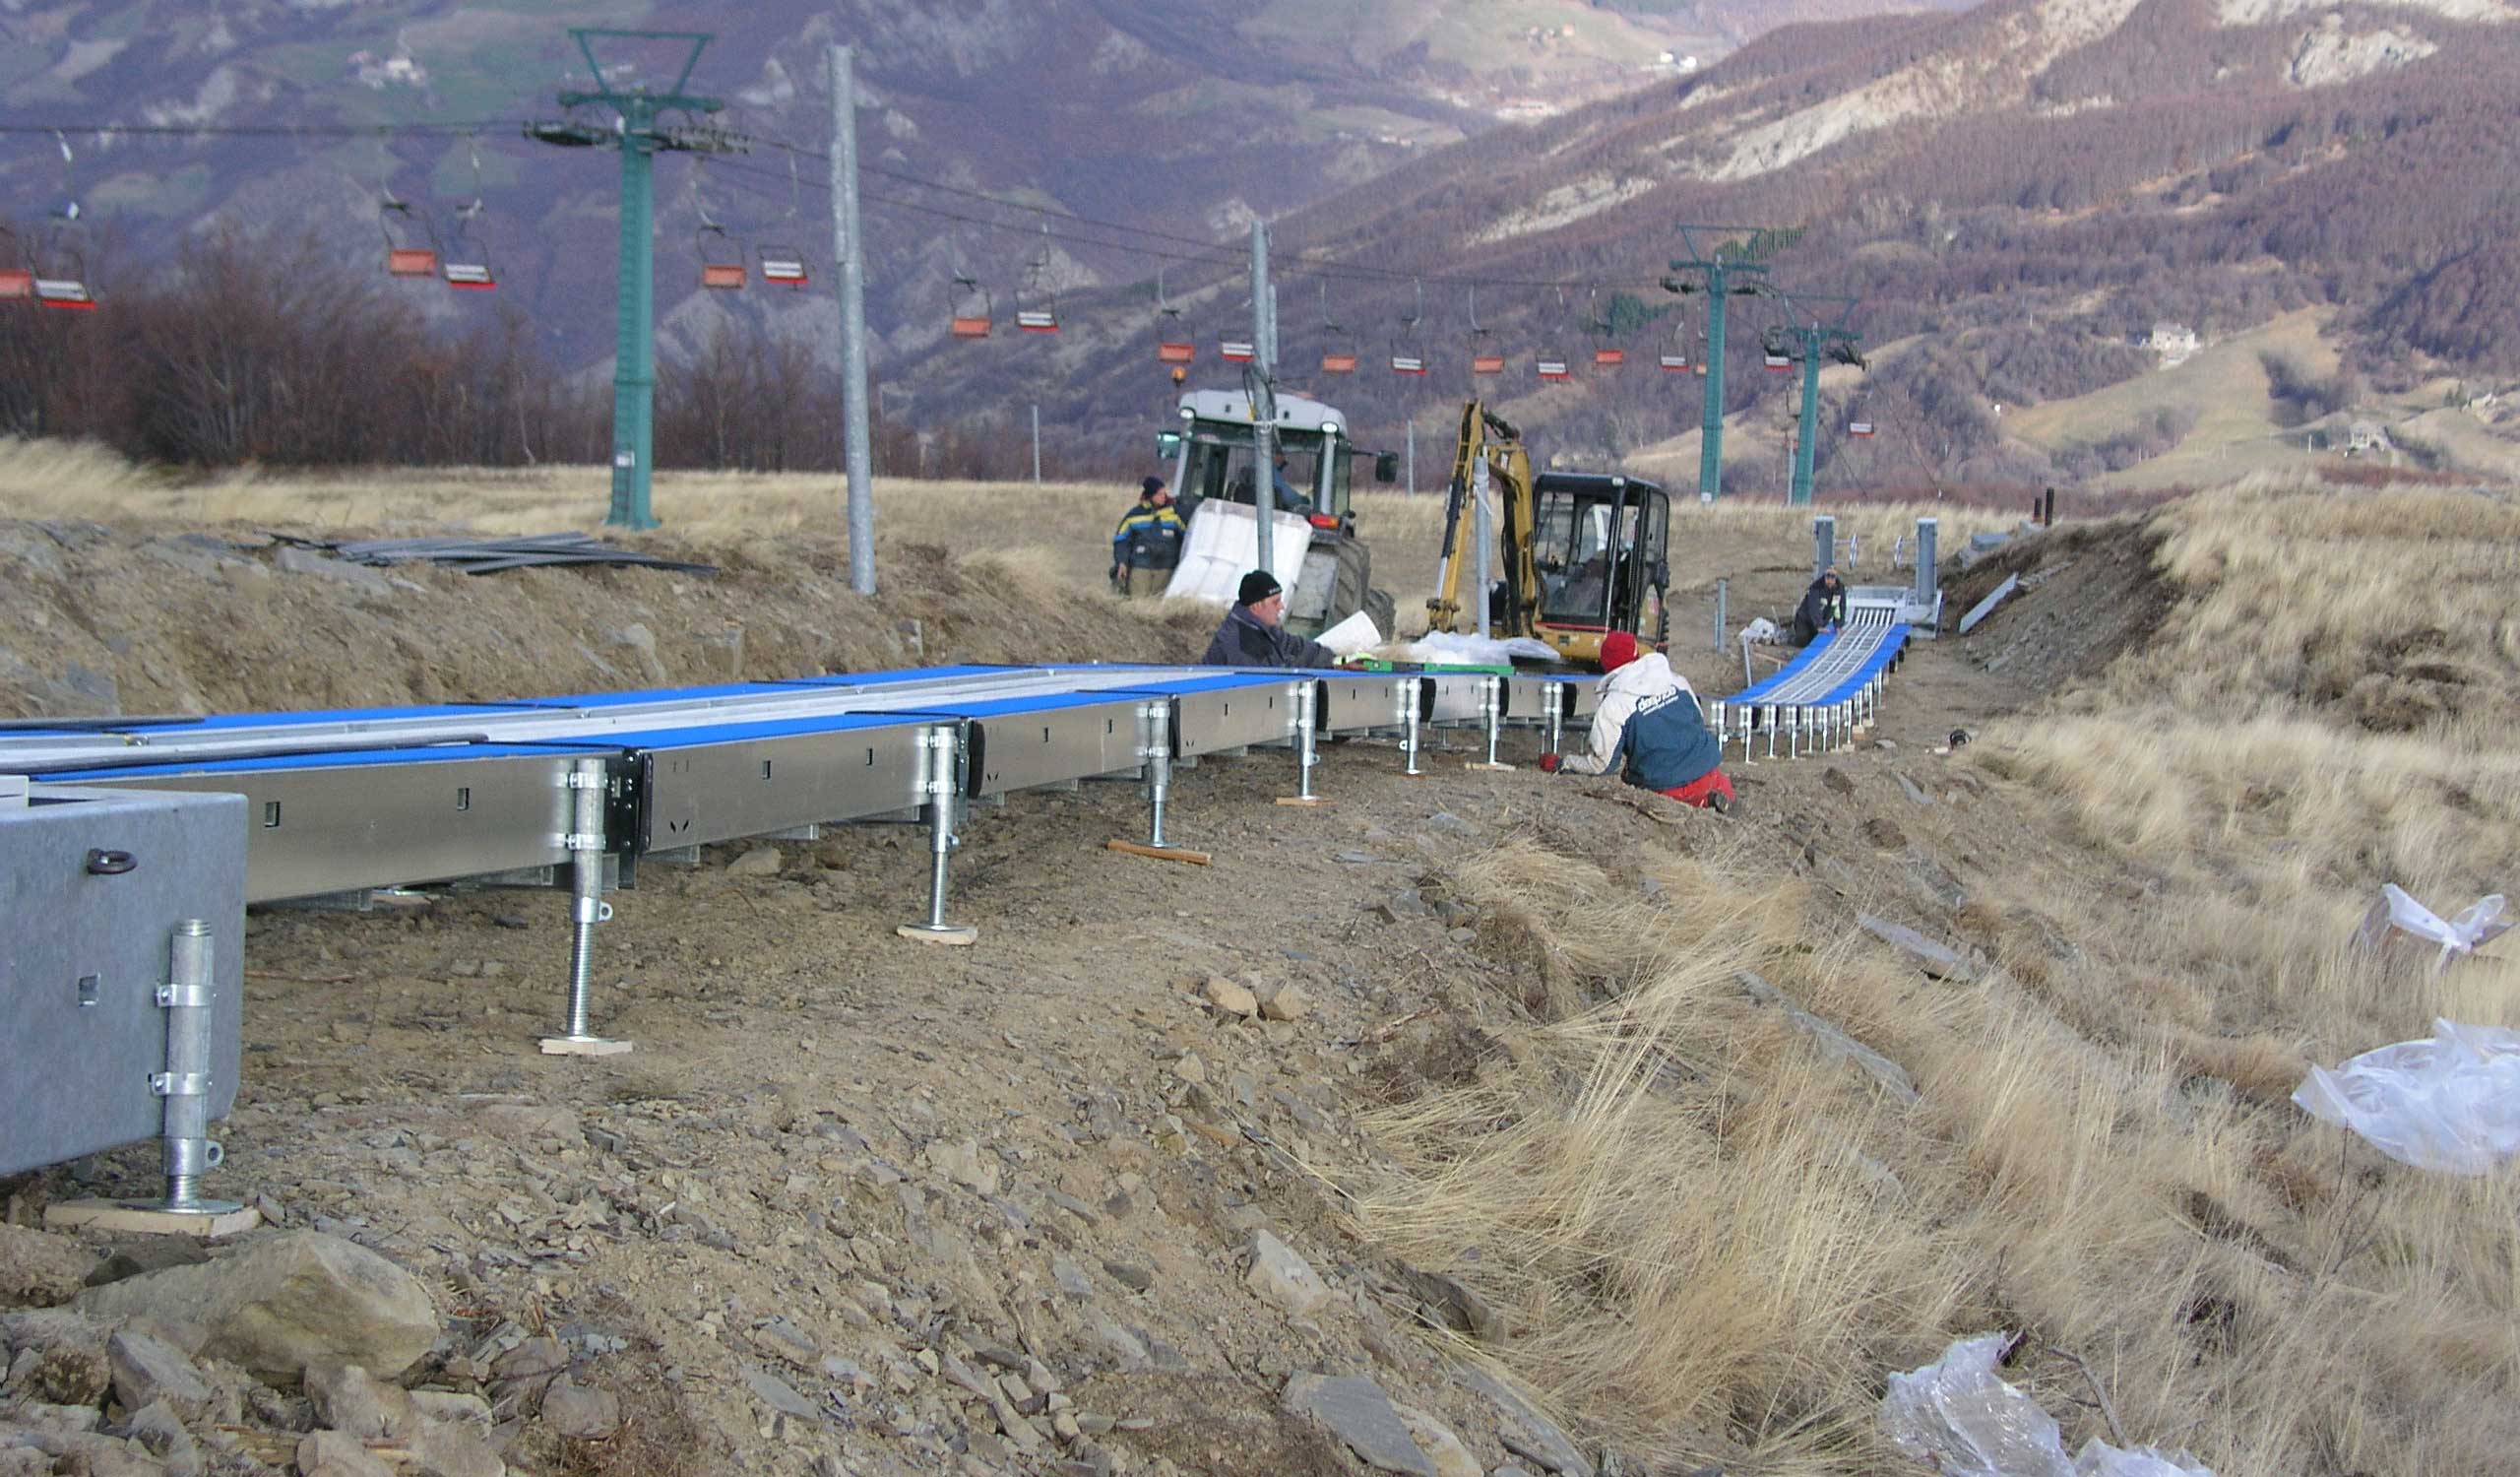 Conveyor Belt for Skiers